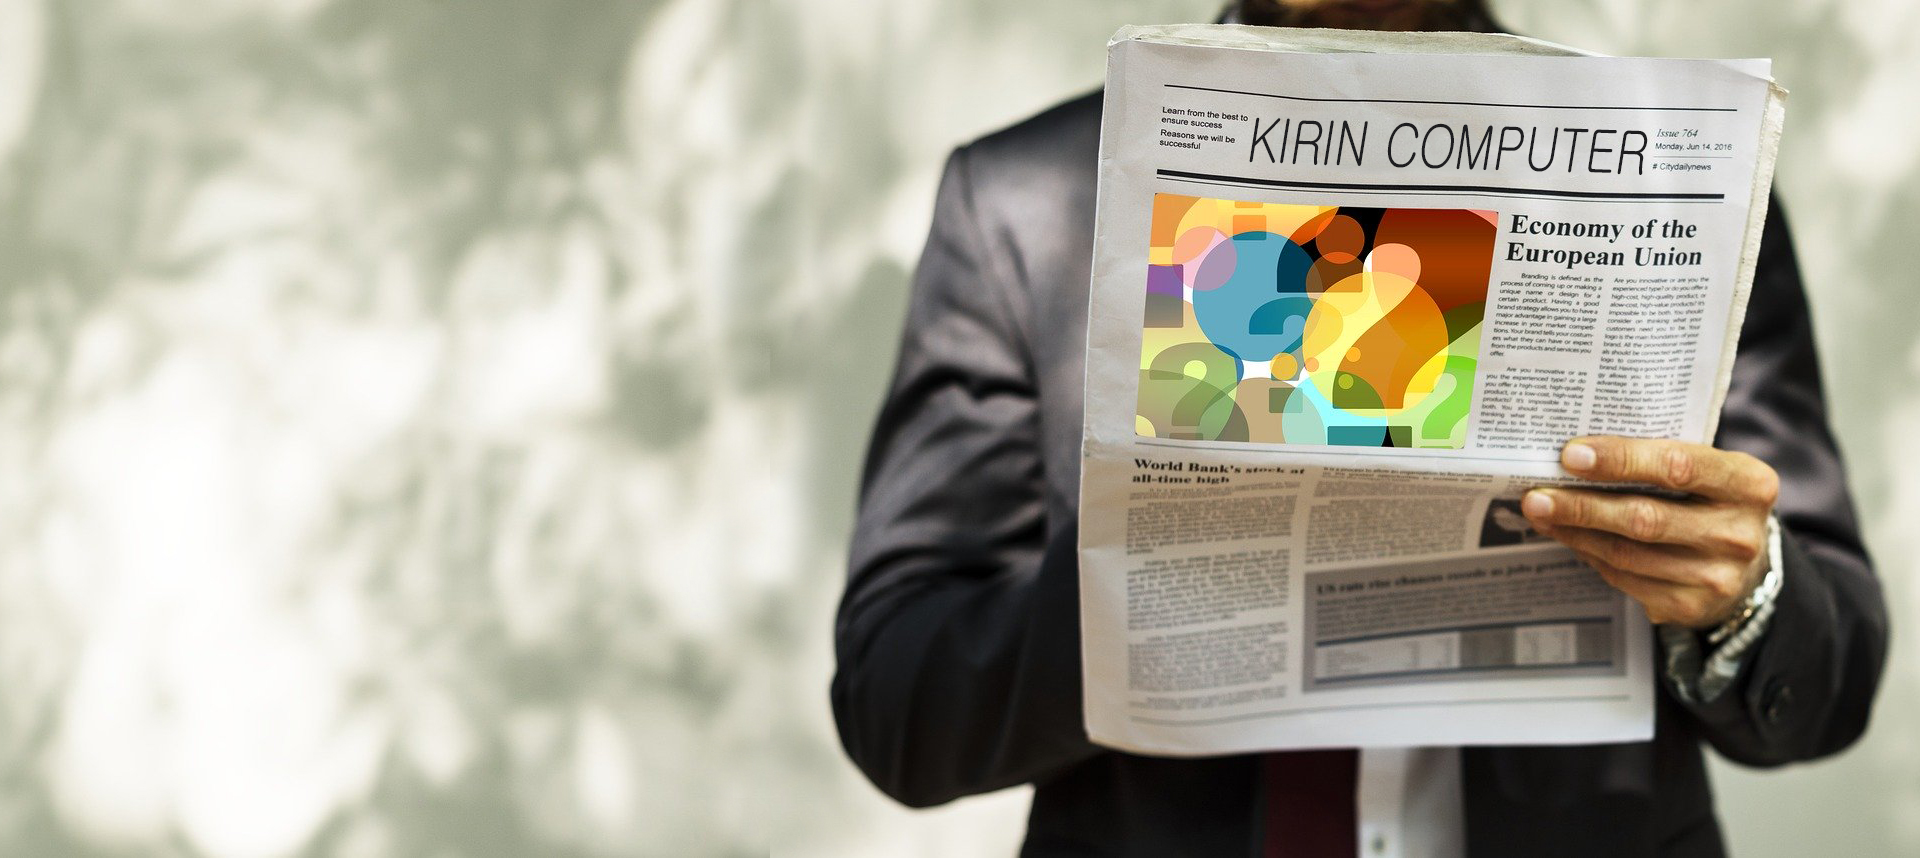 Here is the news of the Kirin Company.